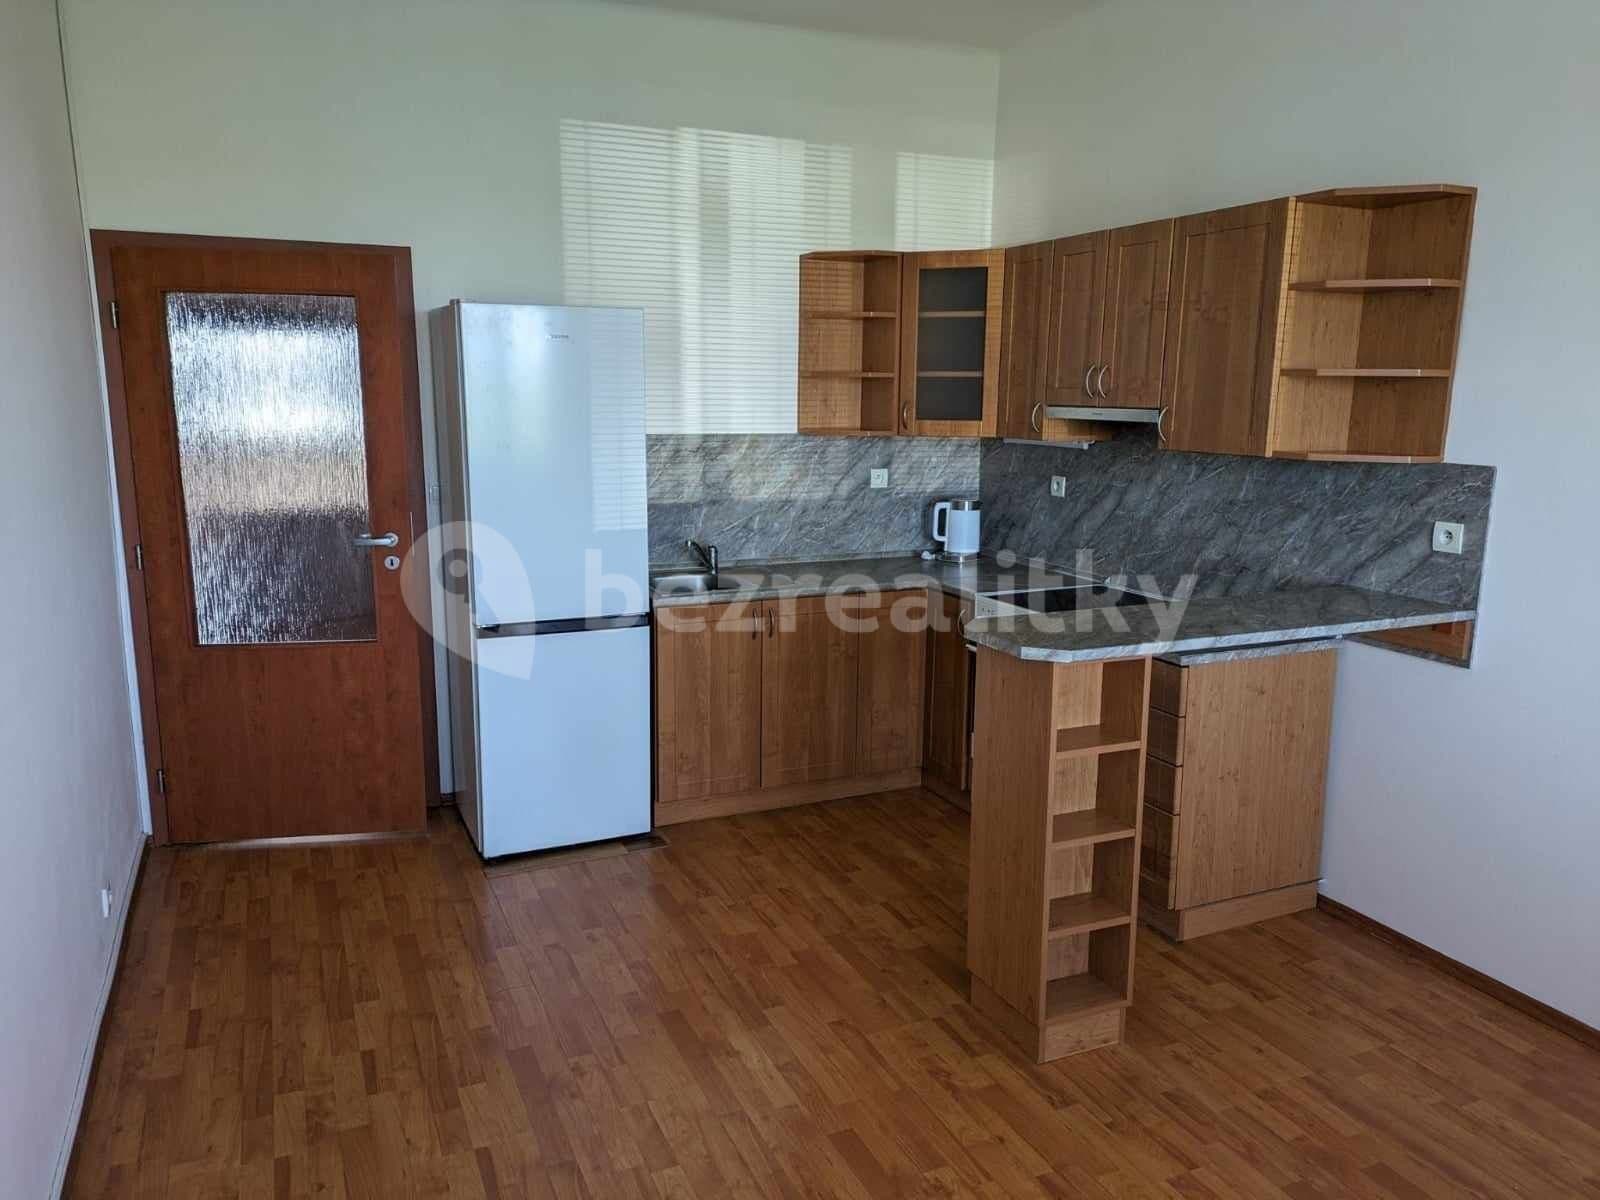 2 bedroom with open-plan kitchen flat to rent, 73 m², Jihlavská, Prague, Prague